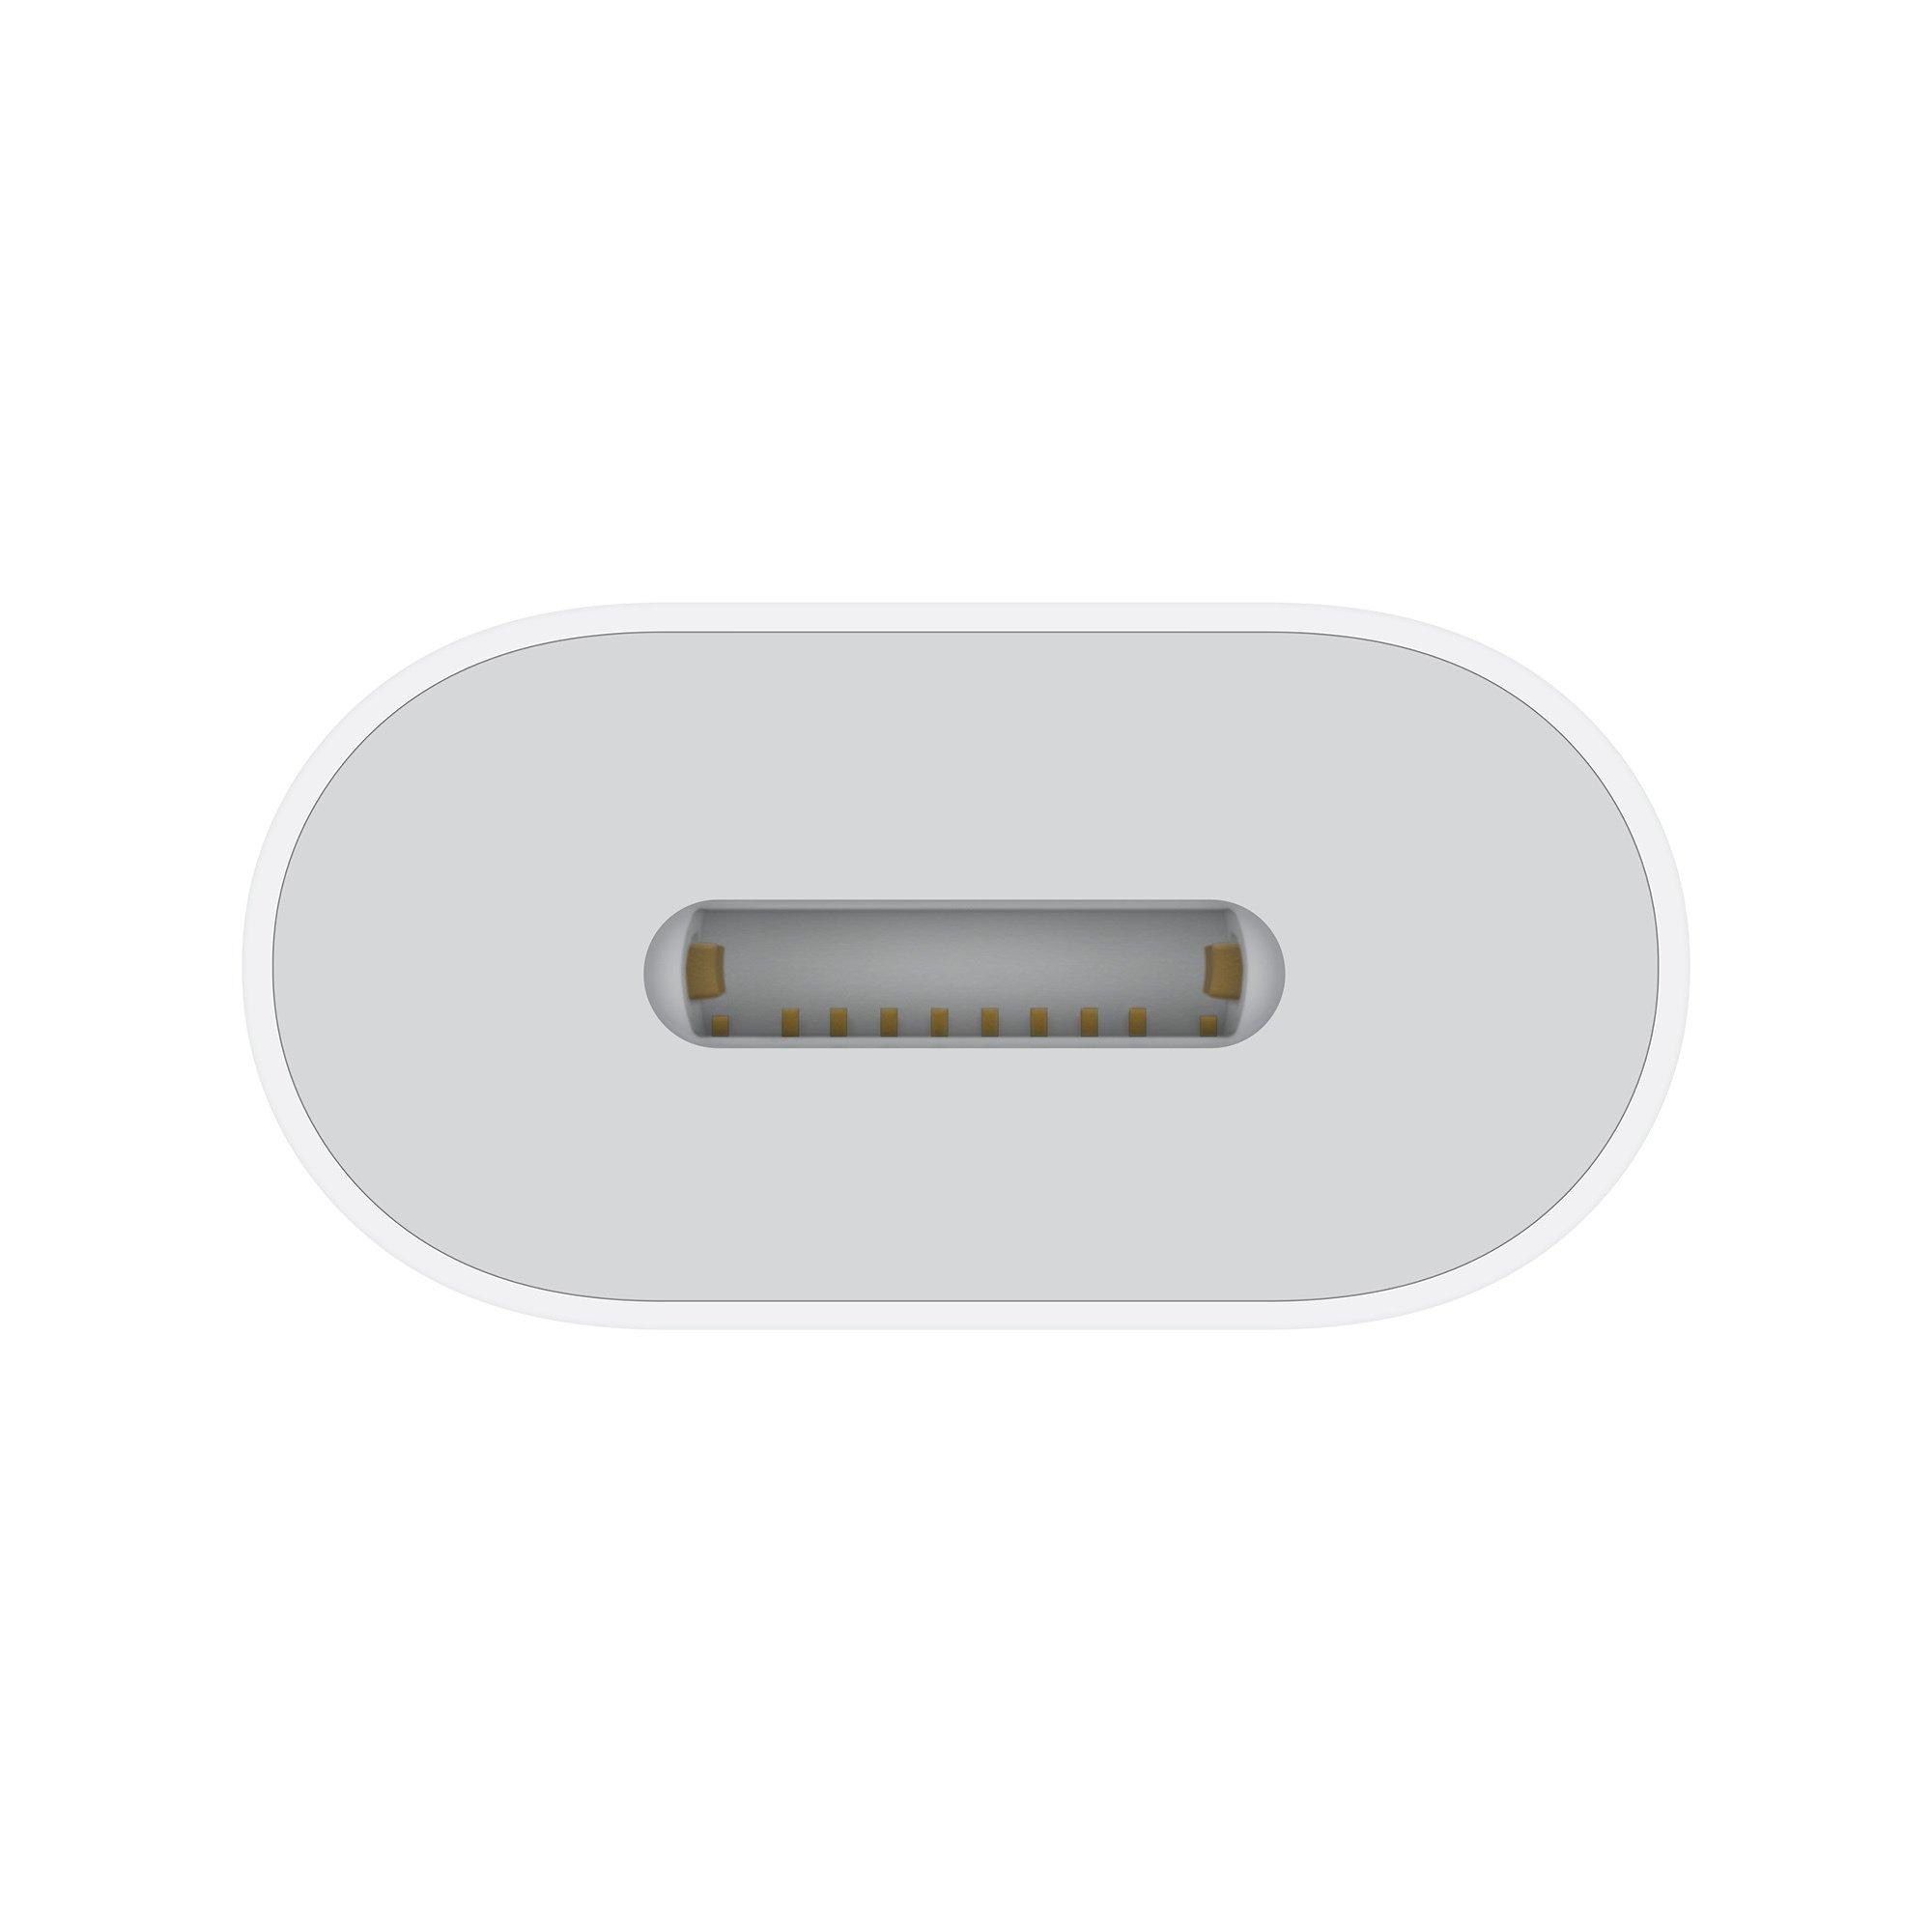 Apple USB-C to Lightning Adapter Adaptateur 